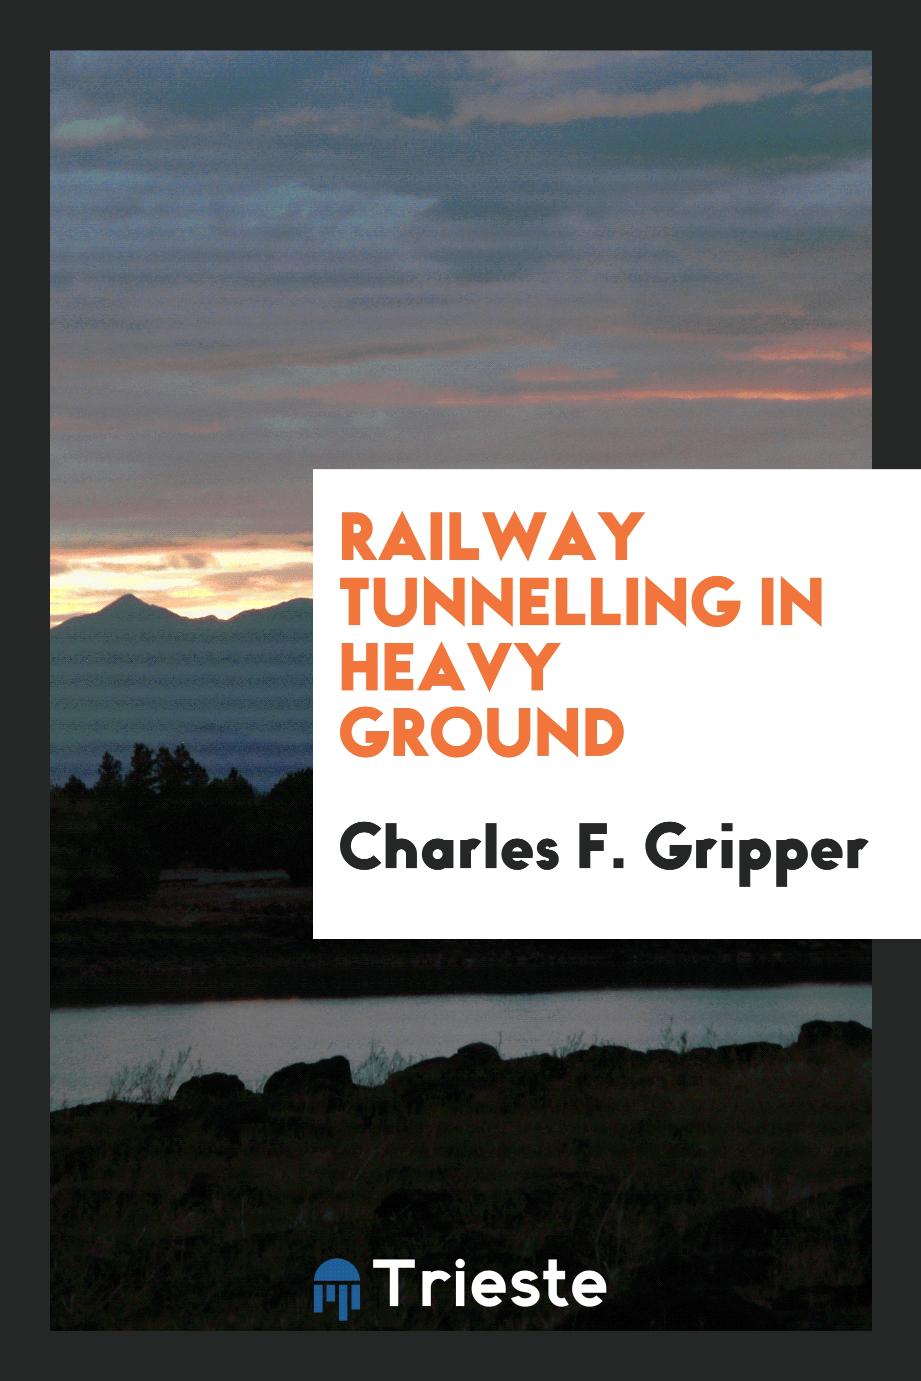 Railway tunnelling in heavy ground